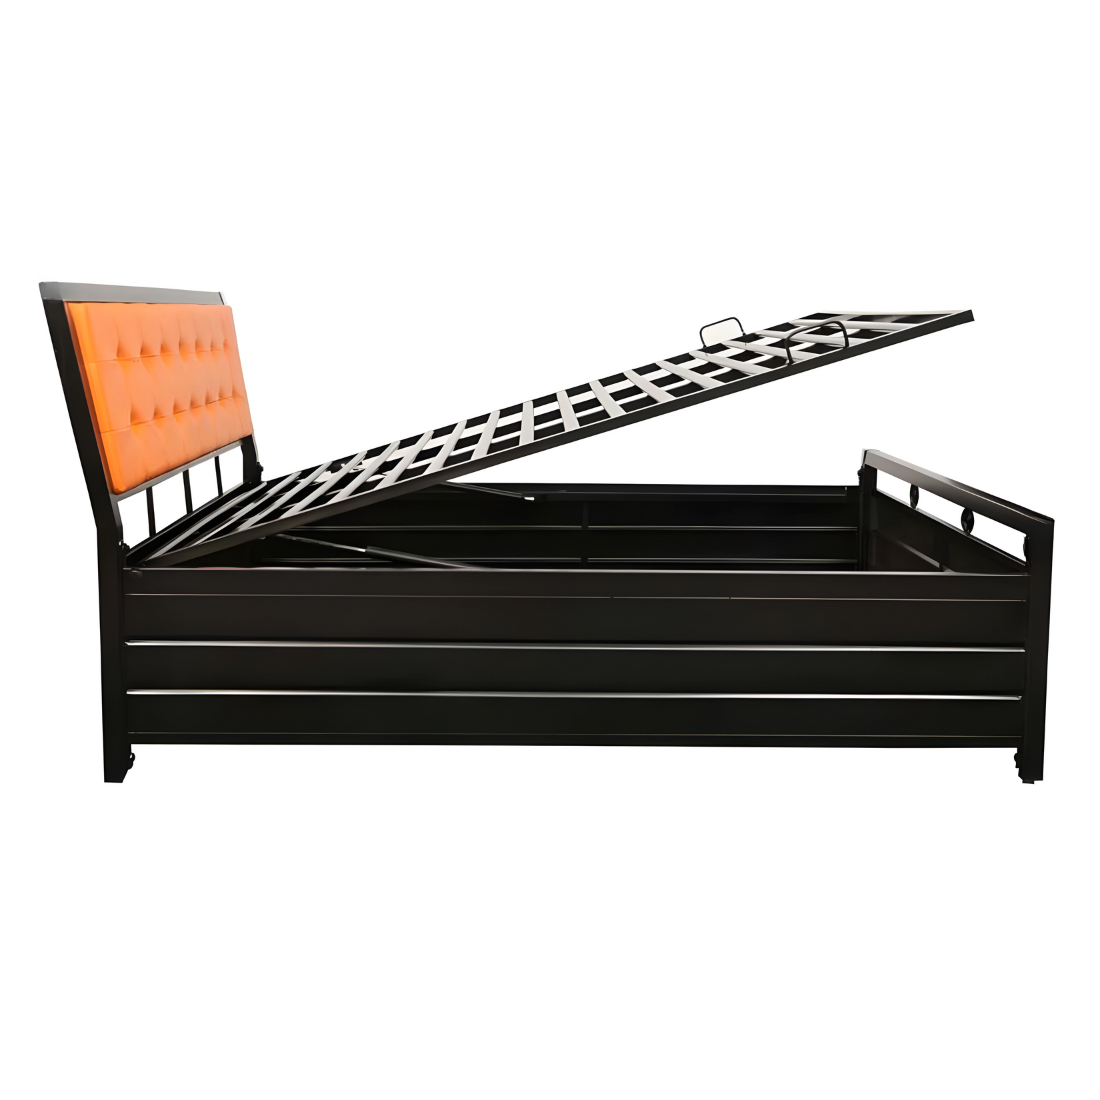 Heath Hydraulic Storage King Metal Bed with Orange Cushion Headrest (Color - Black)